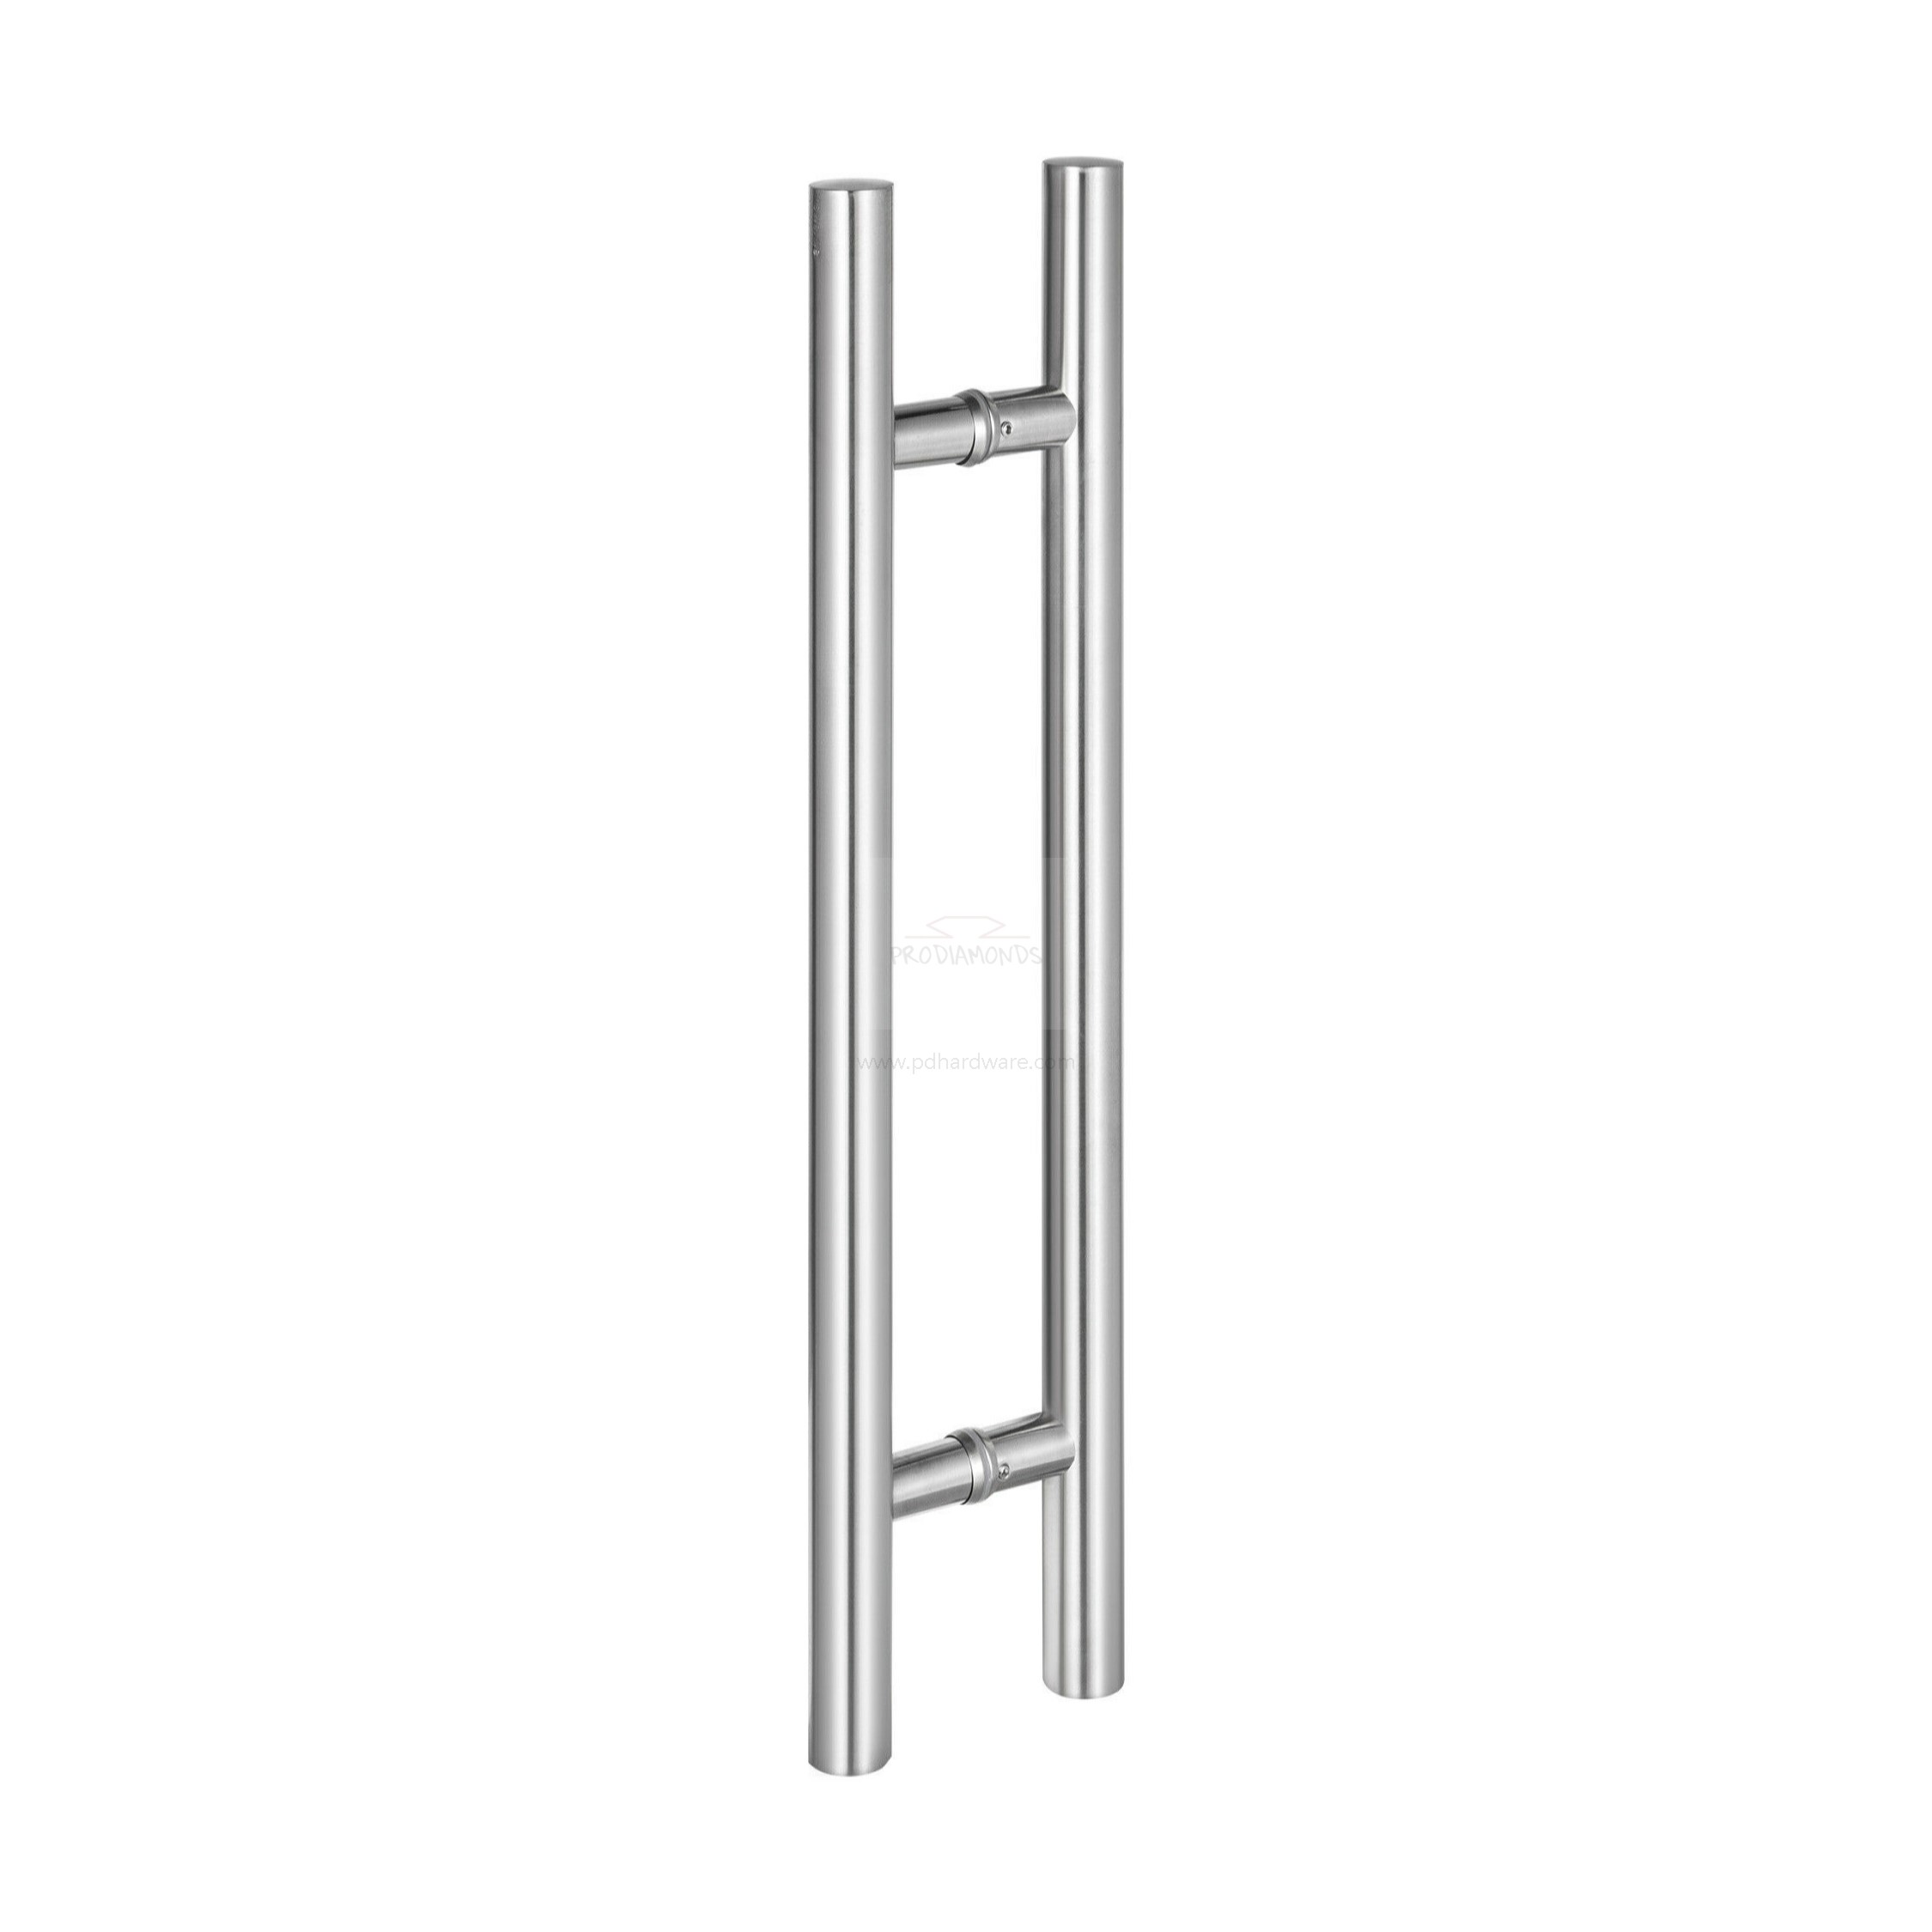 Tirador de puerta de vidrio comercial estilo escalera recta